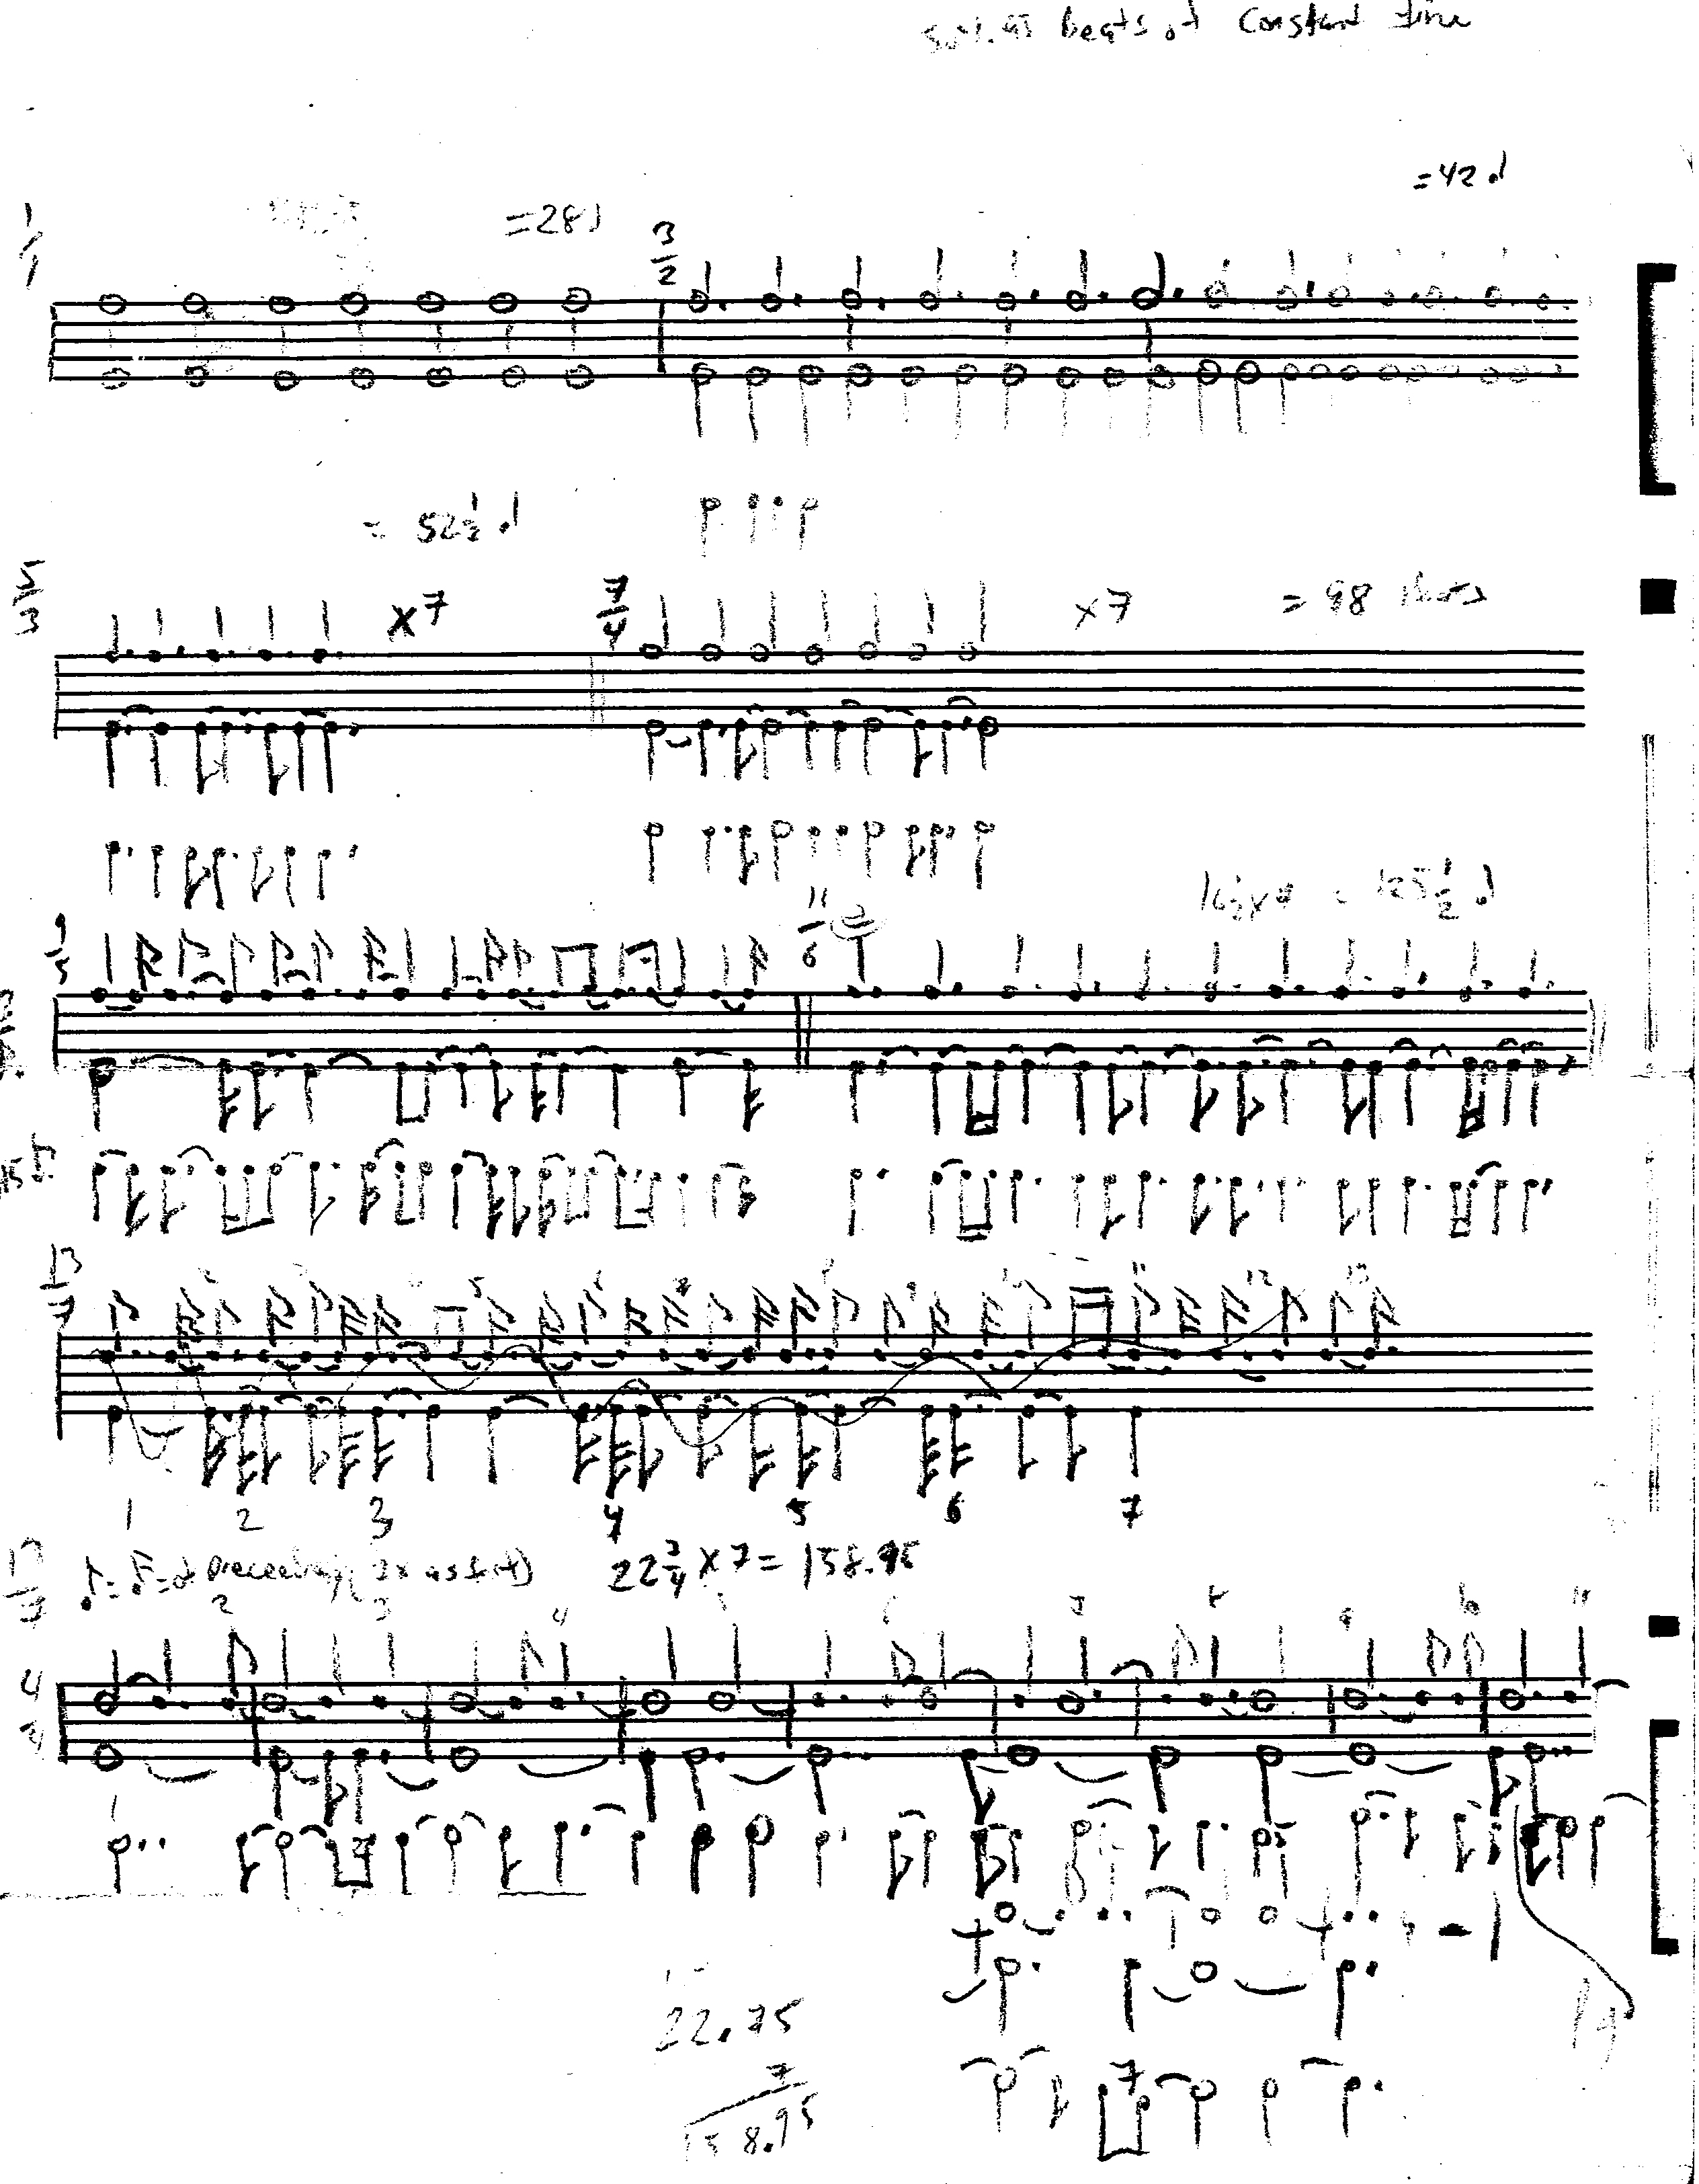 Burdick's-opus62-formation_chart-2